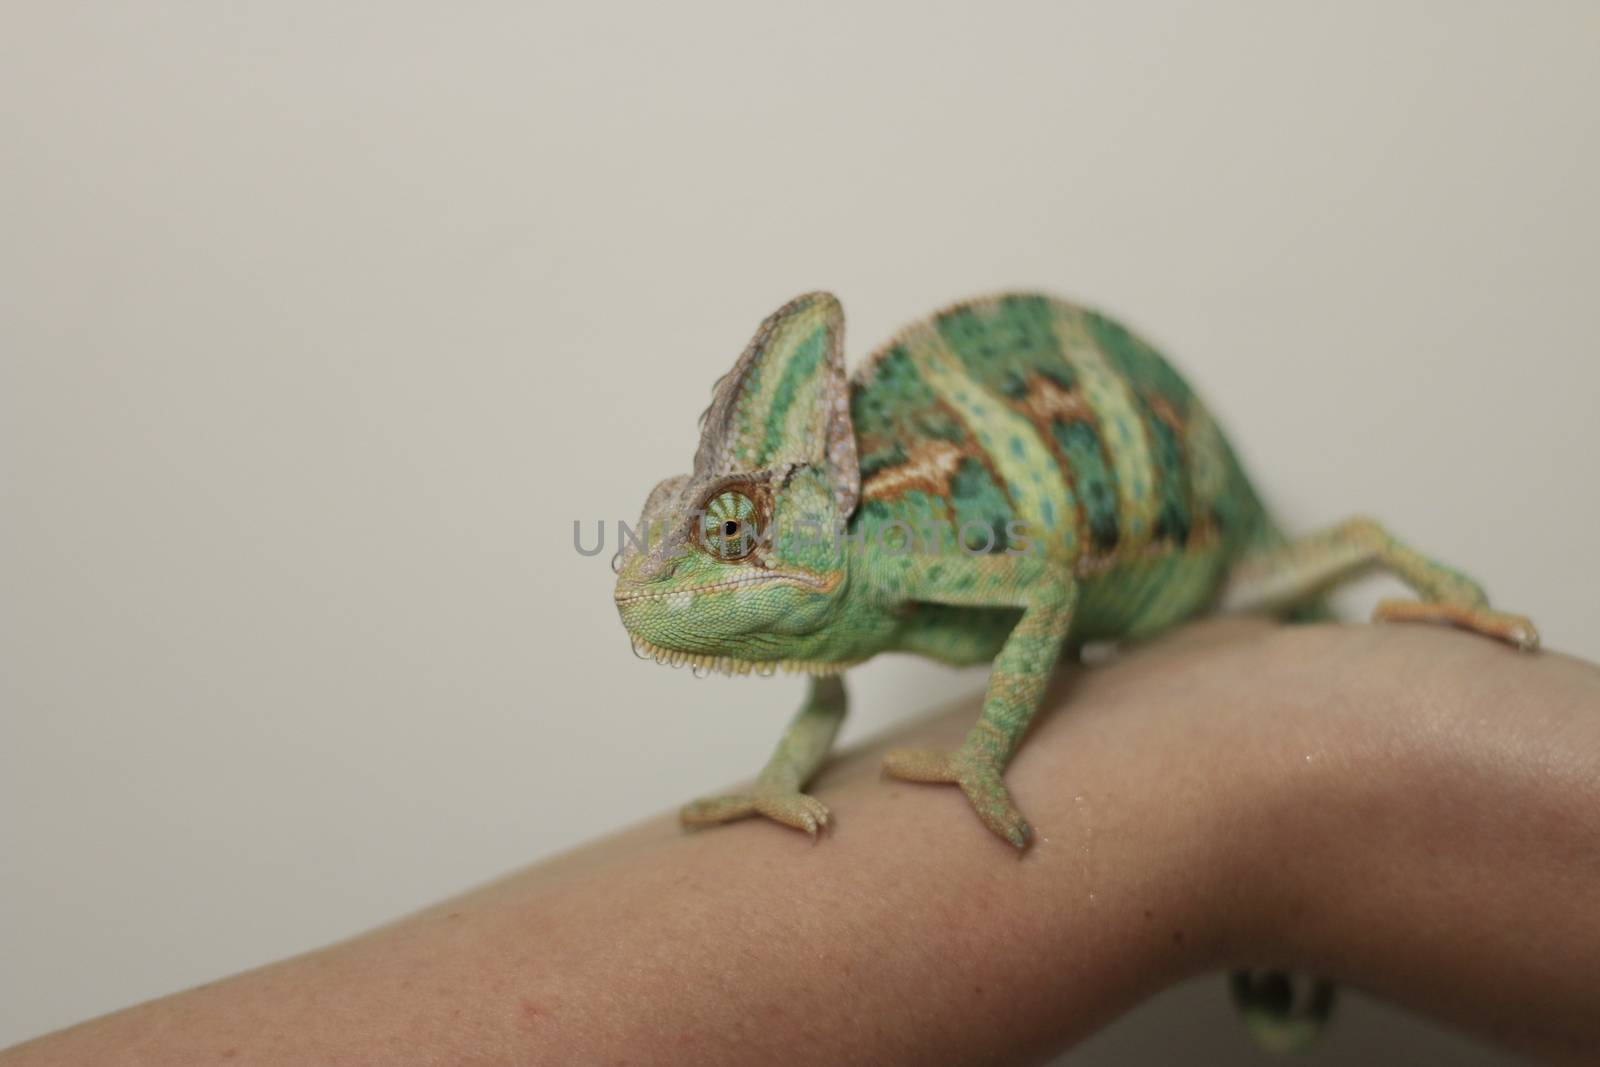 Veiled chameleon (chamaeleo calyptratus) close-up by mynewturtle1